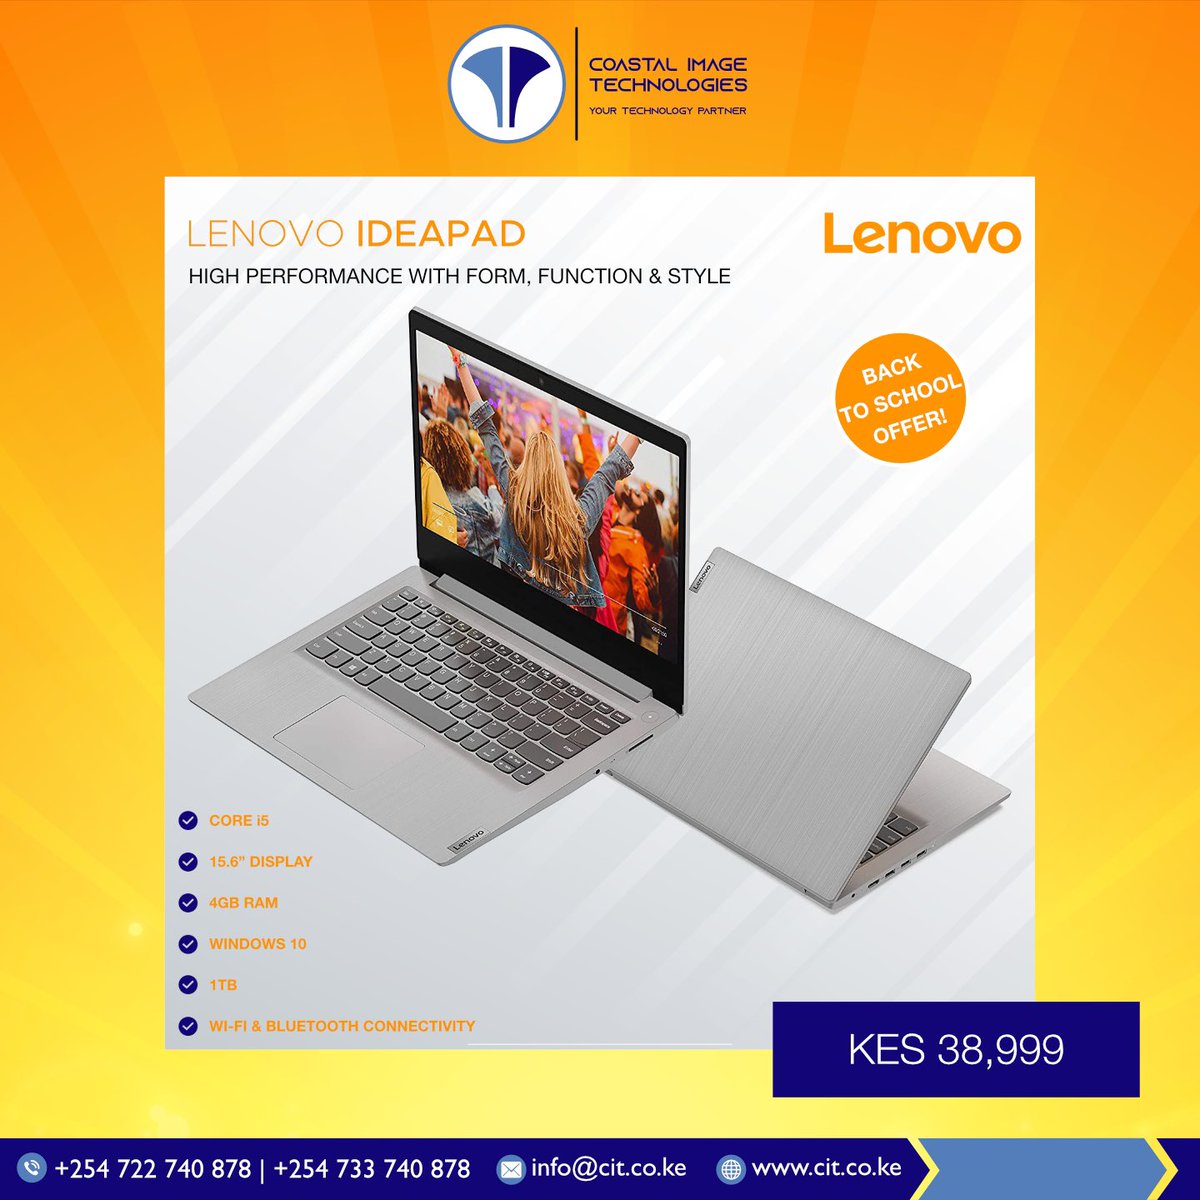 Lenovo Ideapad. BACK TO SCHOOL OFFER!
.
#tech #laptop #servicelaptop #pc #keyboard #mombasa #kenya #coastalimage #techpartner #kenyabusiness #3d #print #technology #giftideas #lenovo #backtoschool #schoolreopening #lenovokenya #lenovoafrica